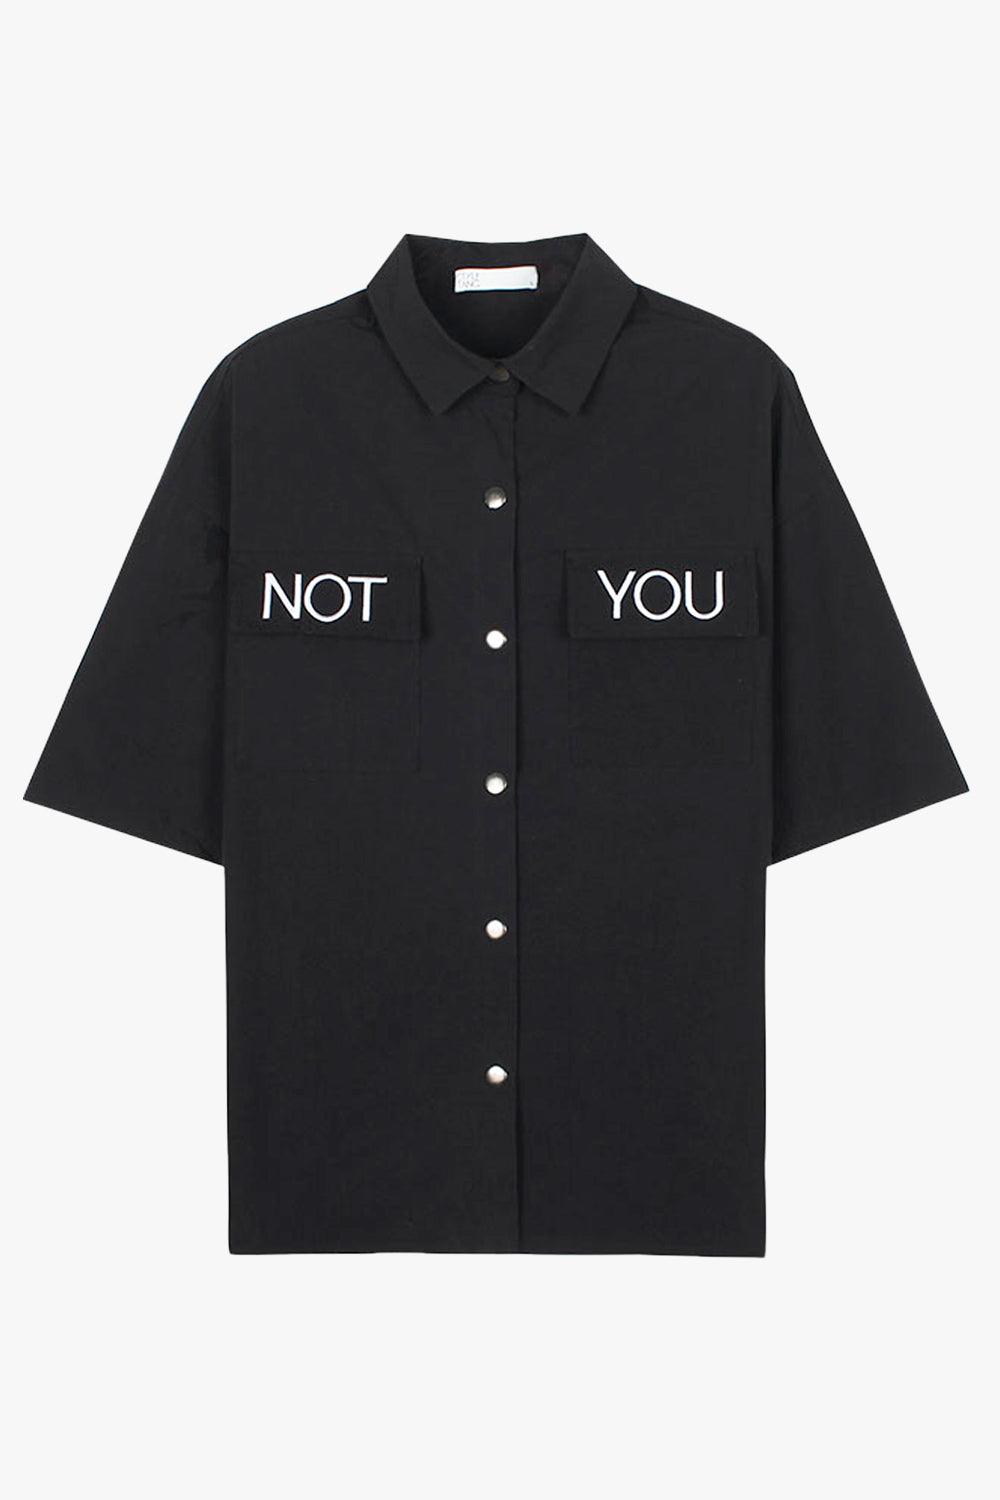 Not You Black Polo Shirt - Aesthetic Clothes Shop